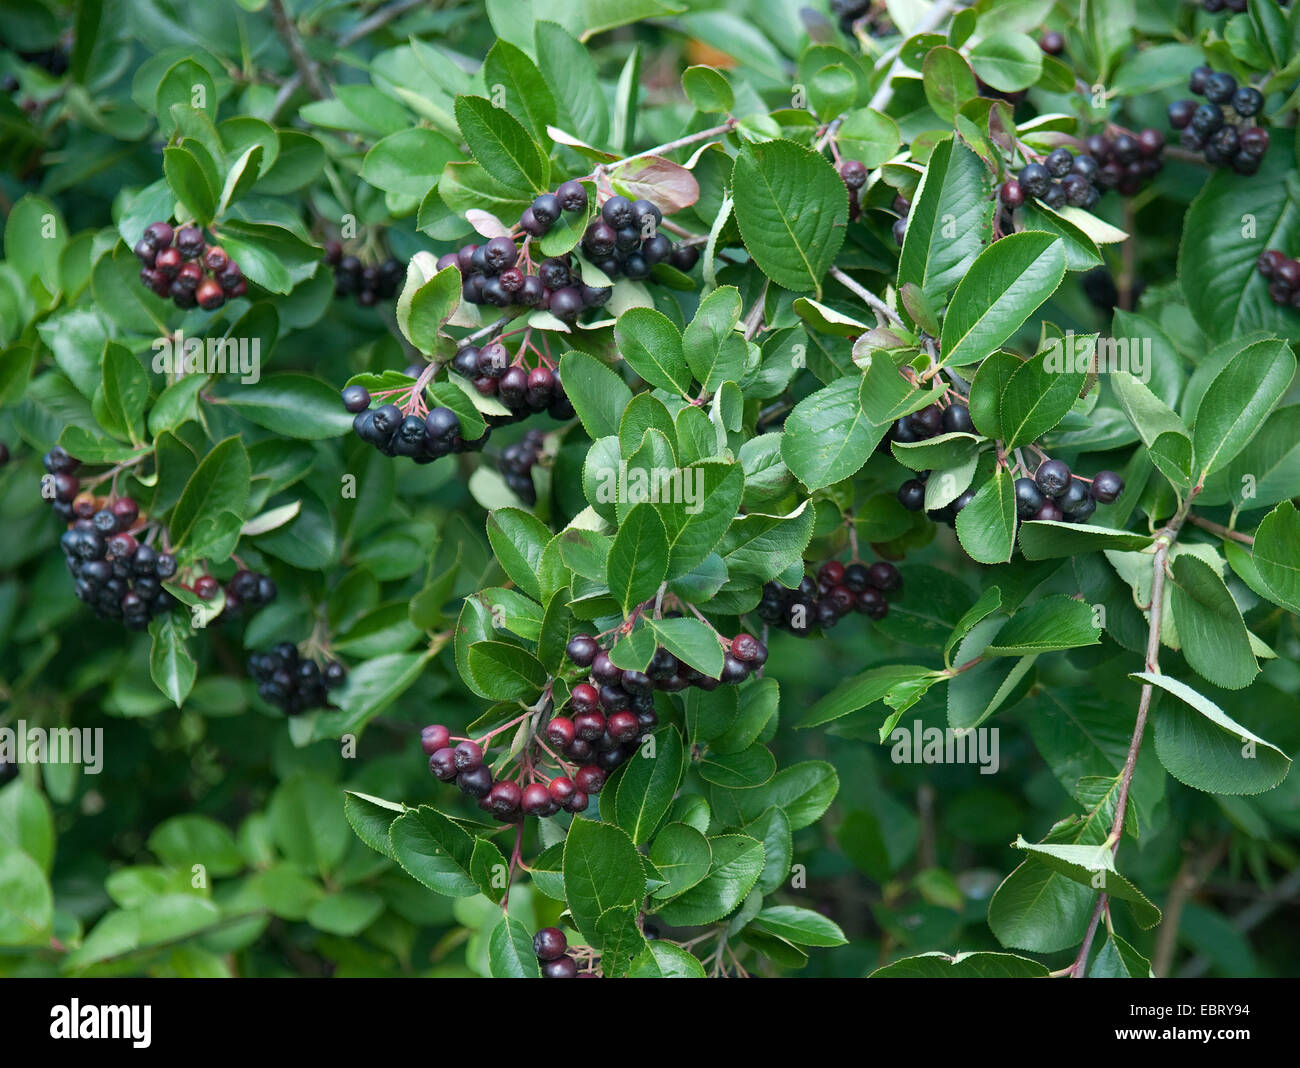 Black Chokeberry (Aronia melanocarpa 'Viking', Aronia melanocarpa Viking, Photinia melanocarpa 'Viking', Photinia melanocarpa Viking), cultivar Viking Stock Photo